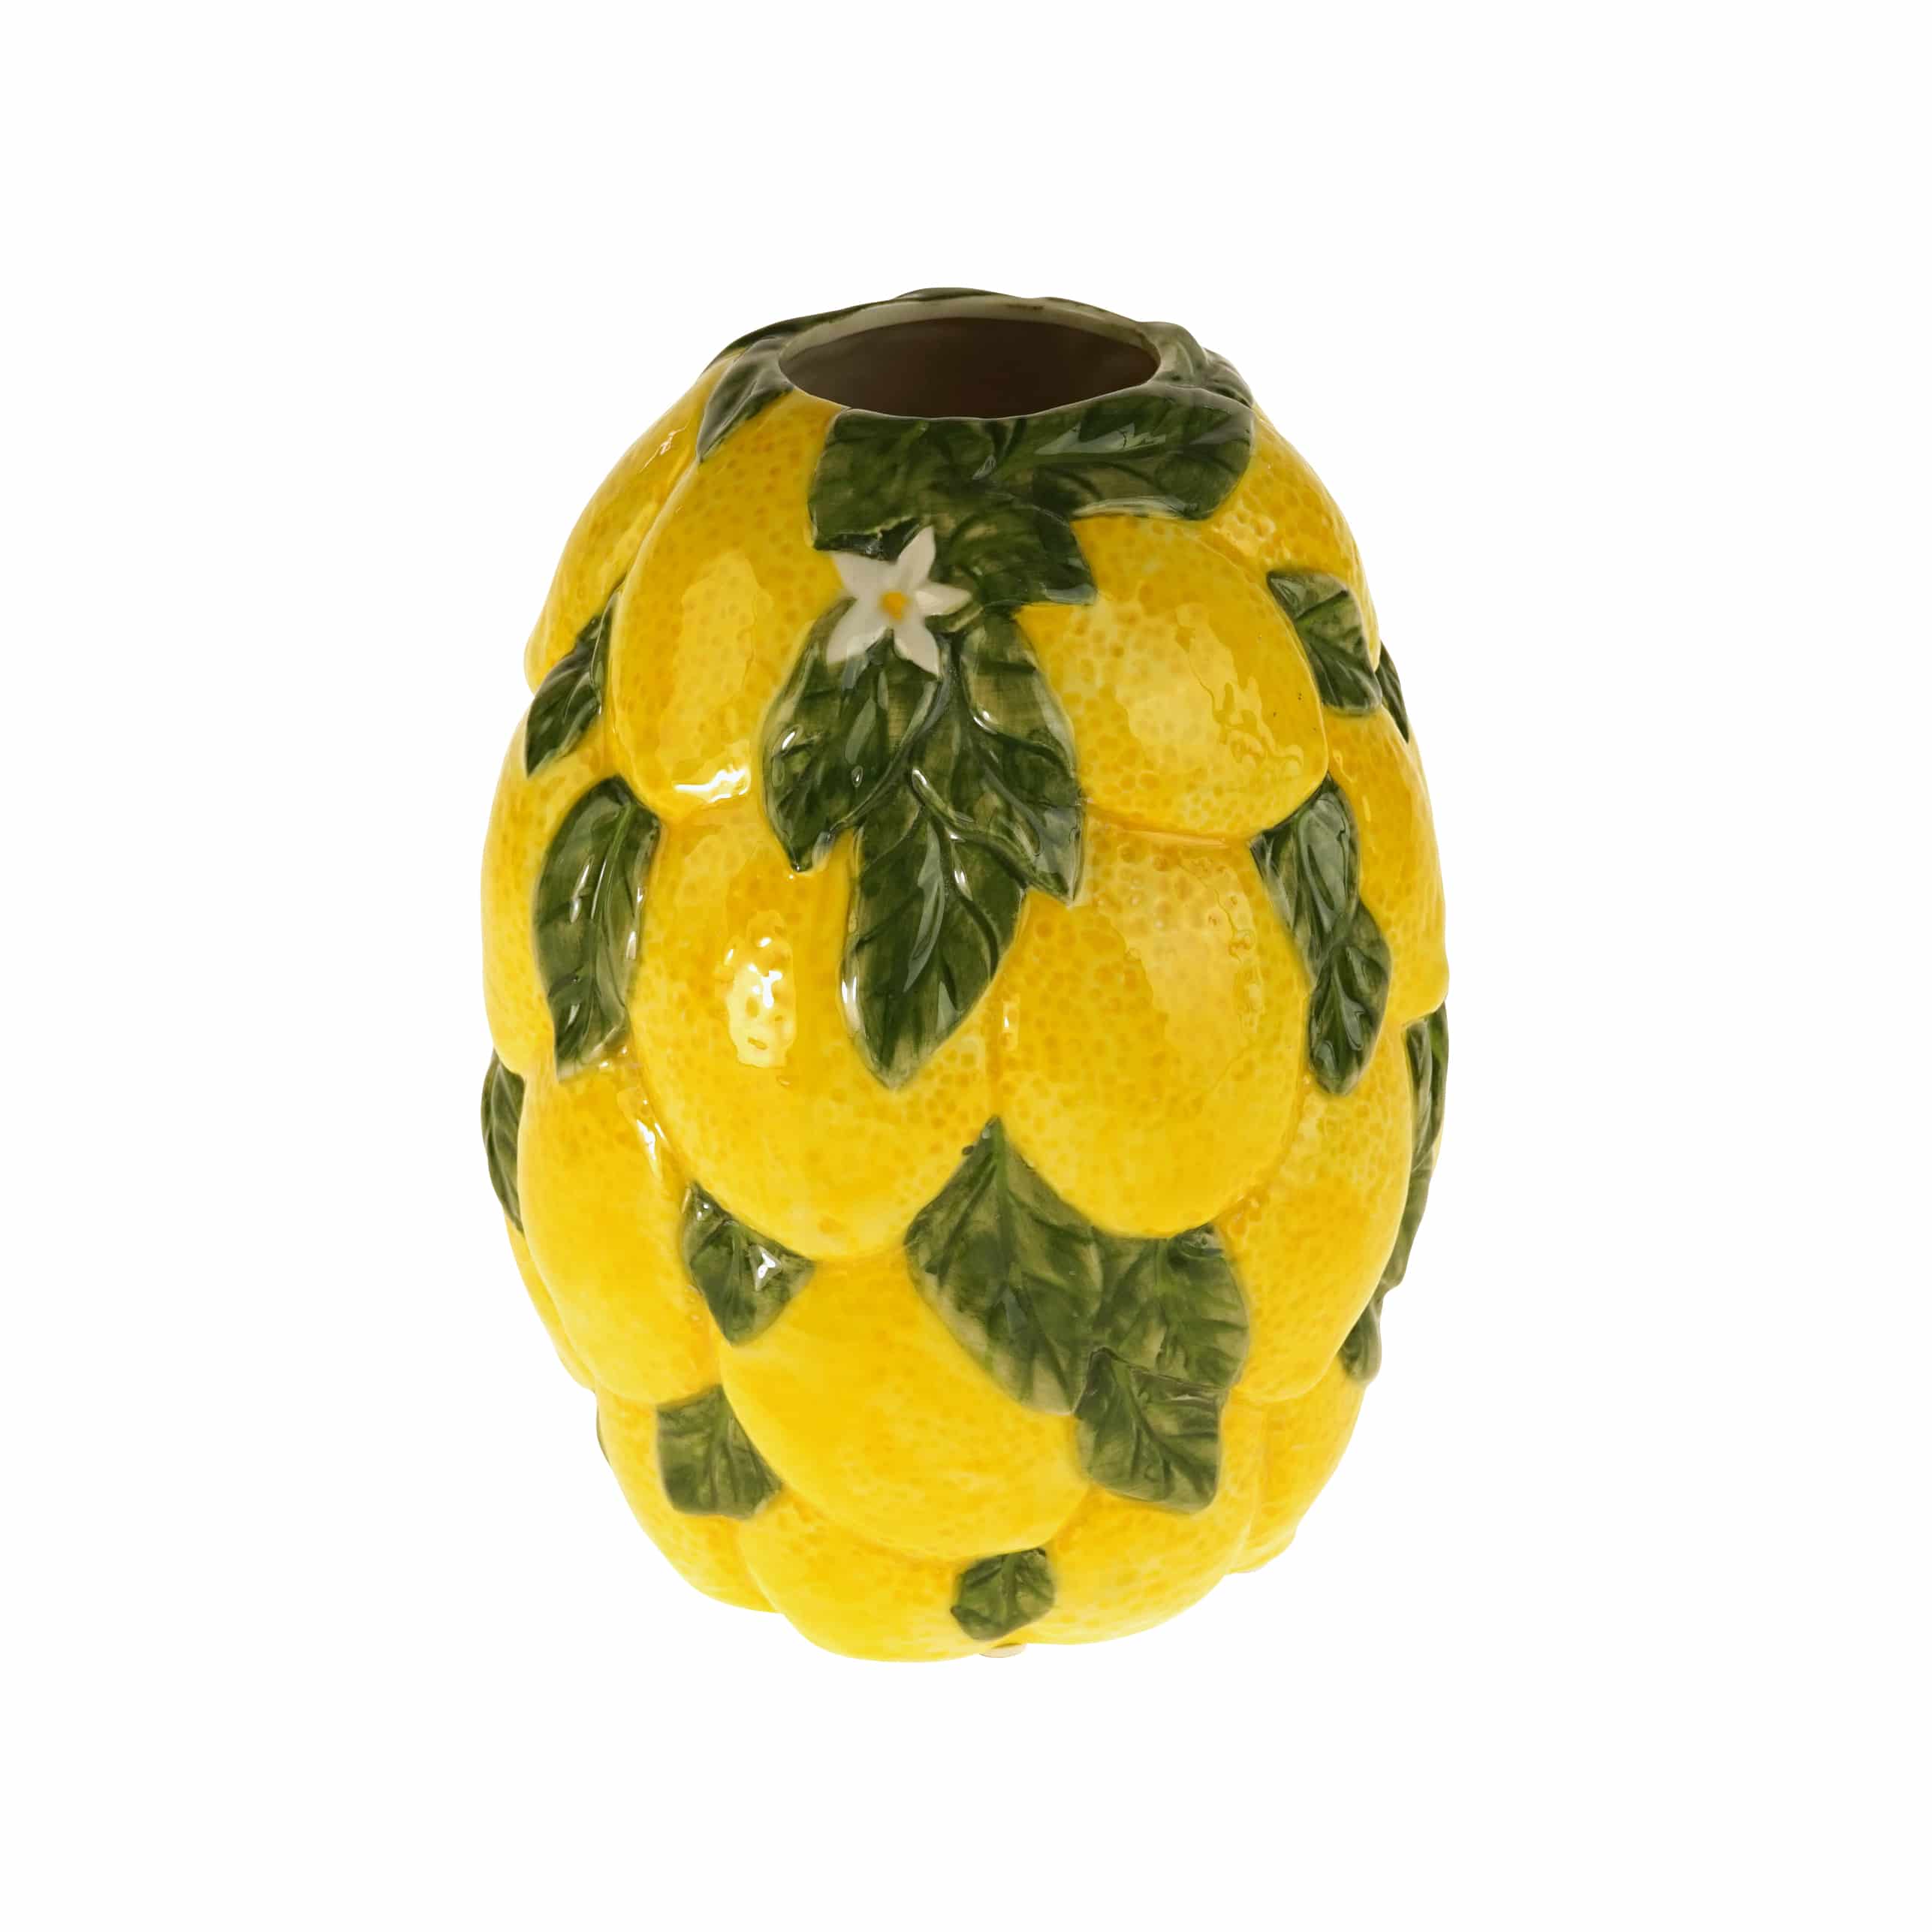 Dekovase Lemons, Zitrone m. Blättern, gelb-grün, handbemalt